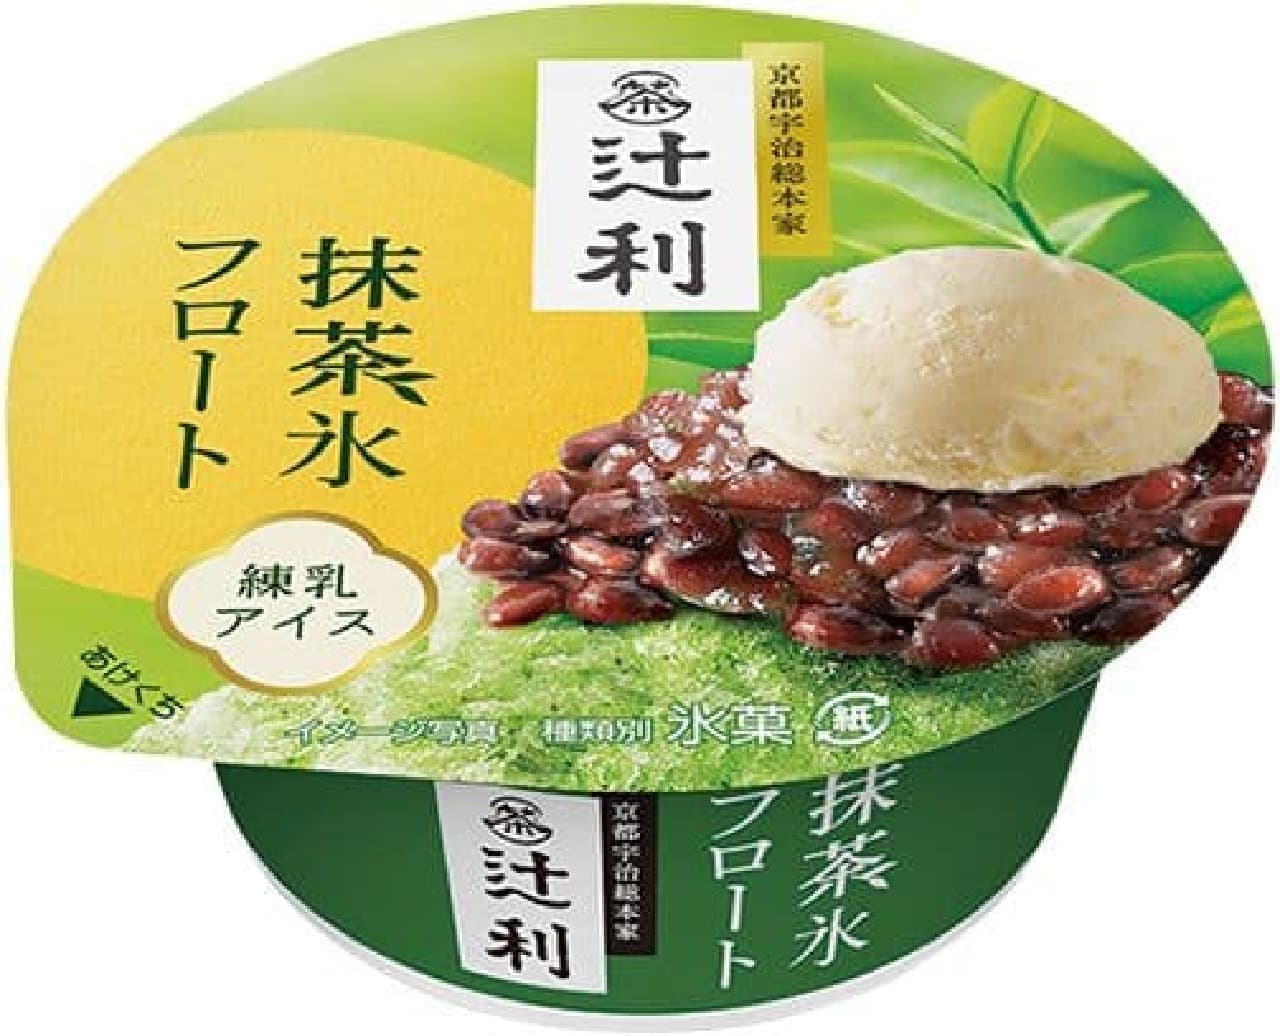 FamilyMart "Meiji Tsujiri Green Tea Ice Float".